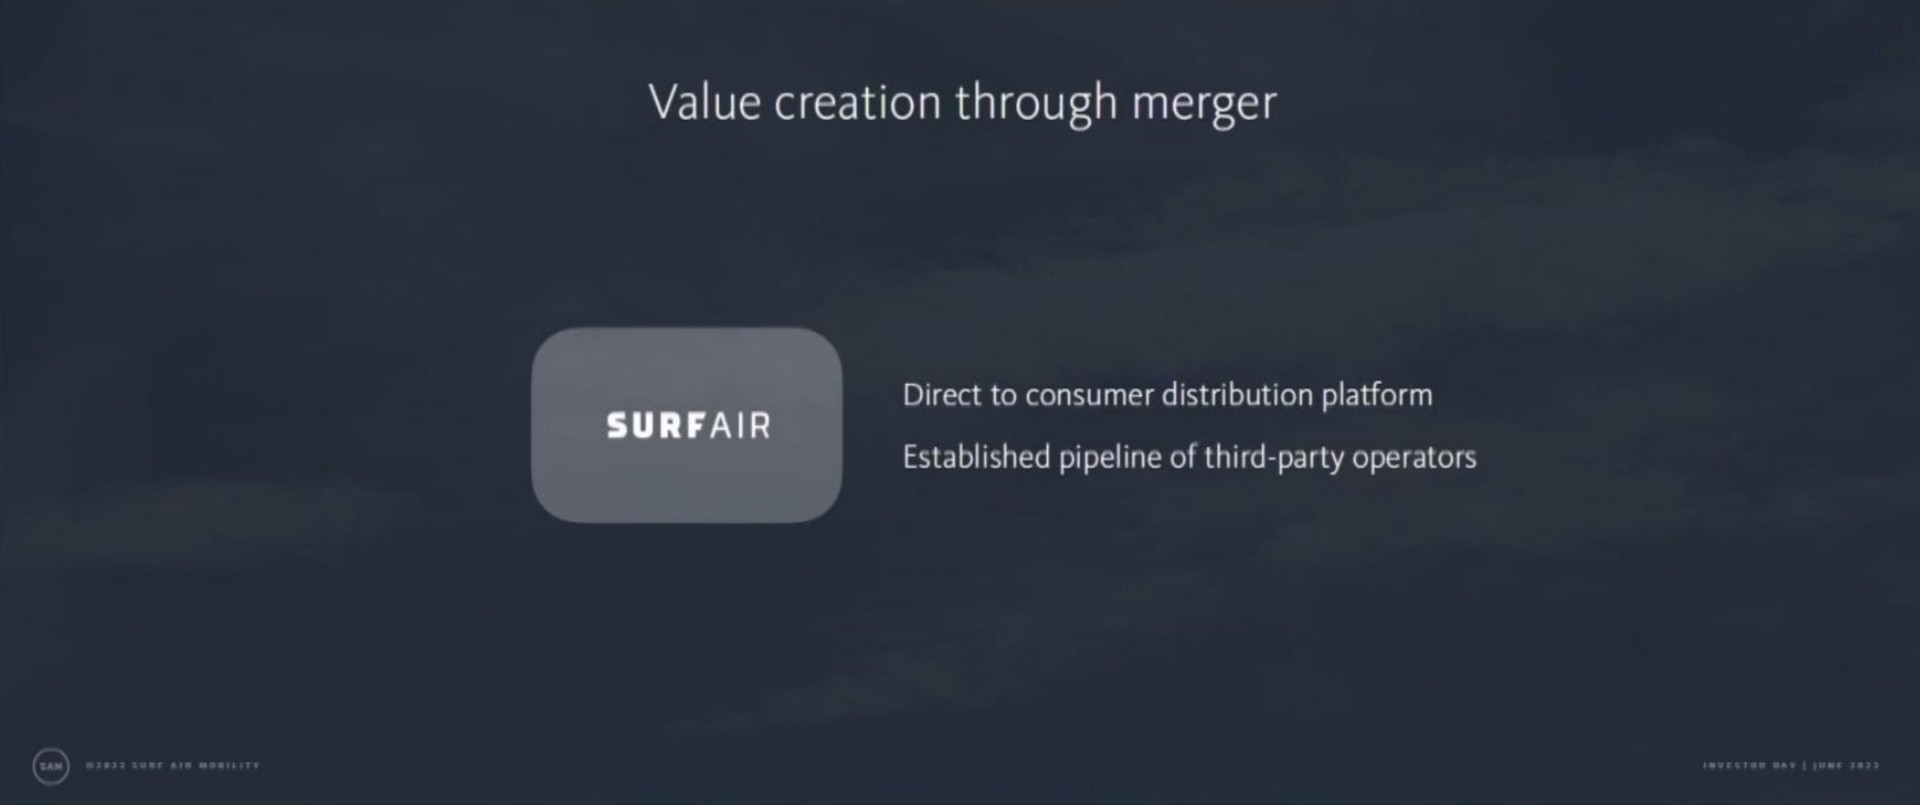 mot olam dam direct to consumer distribution platform established pipeline of third party operators | Surf Air